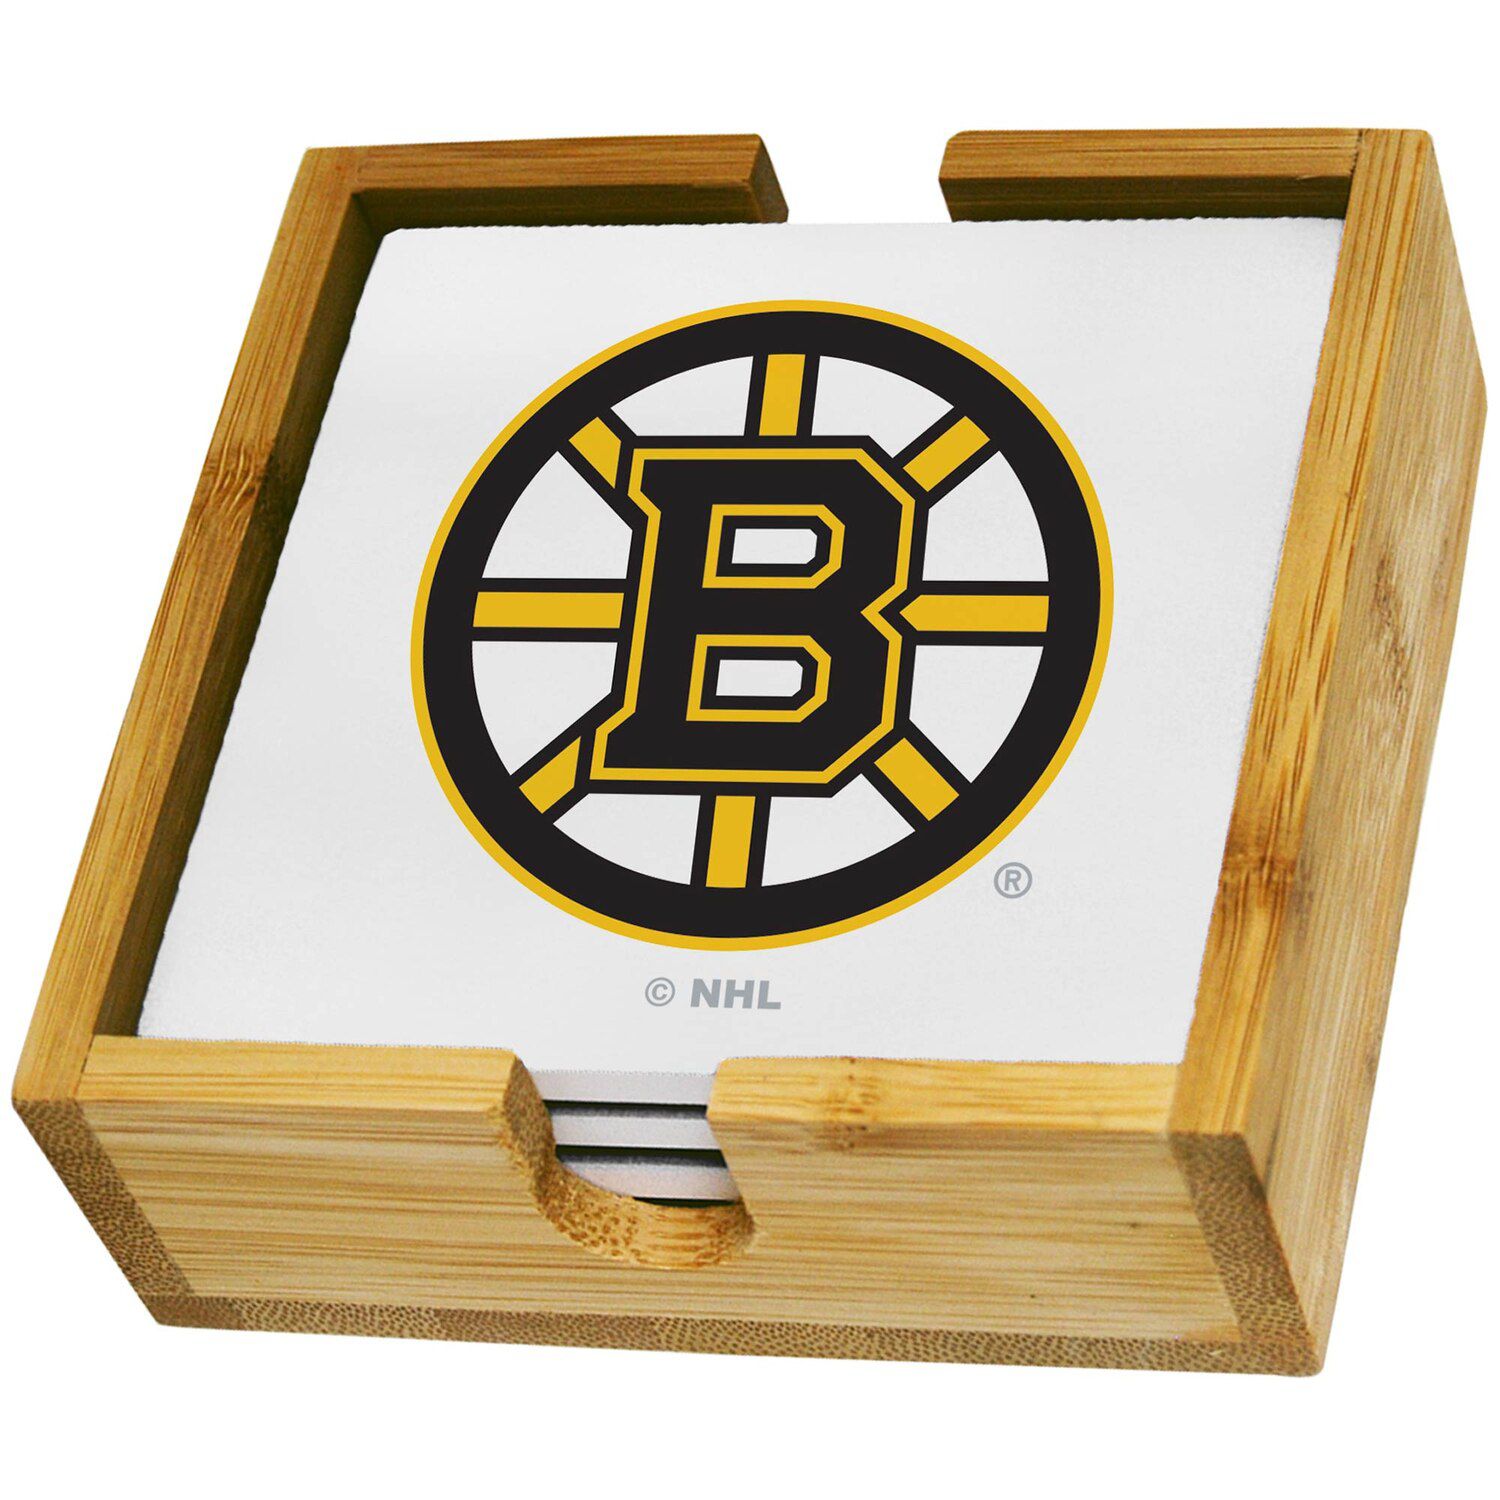 Image for Unbranded Boston Bruins Four-Pack Team Logo Square Coaster Set at Kohl's.